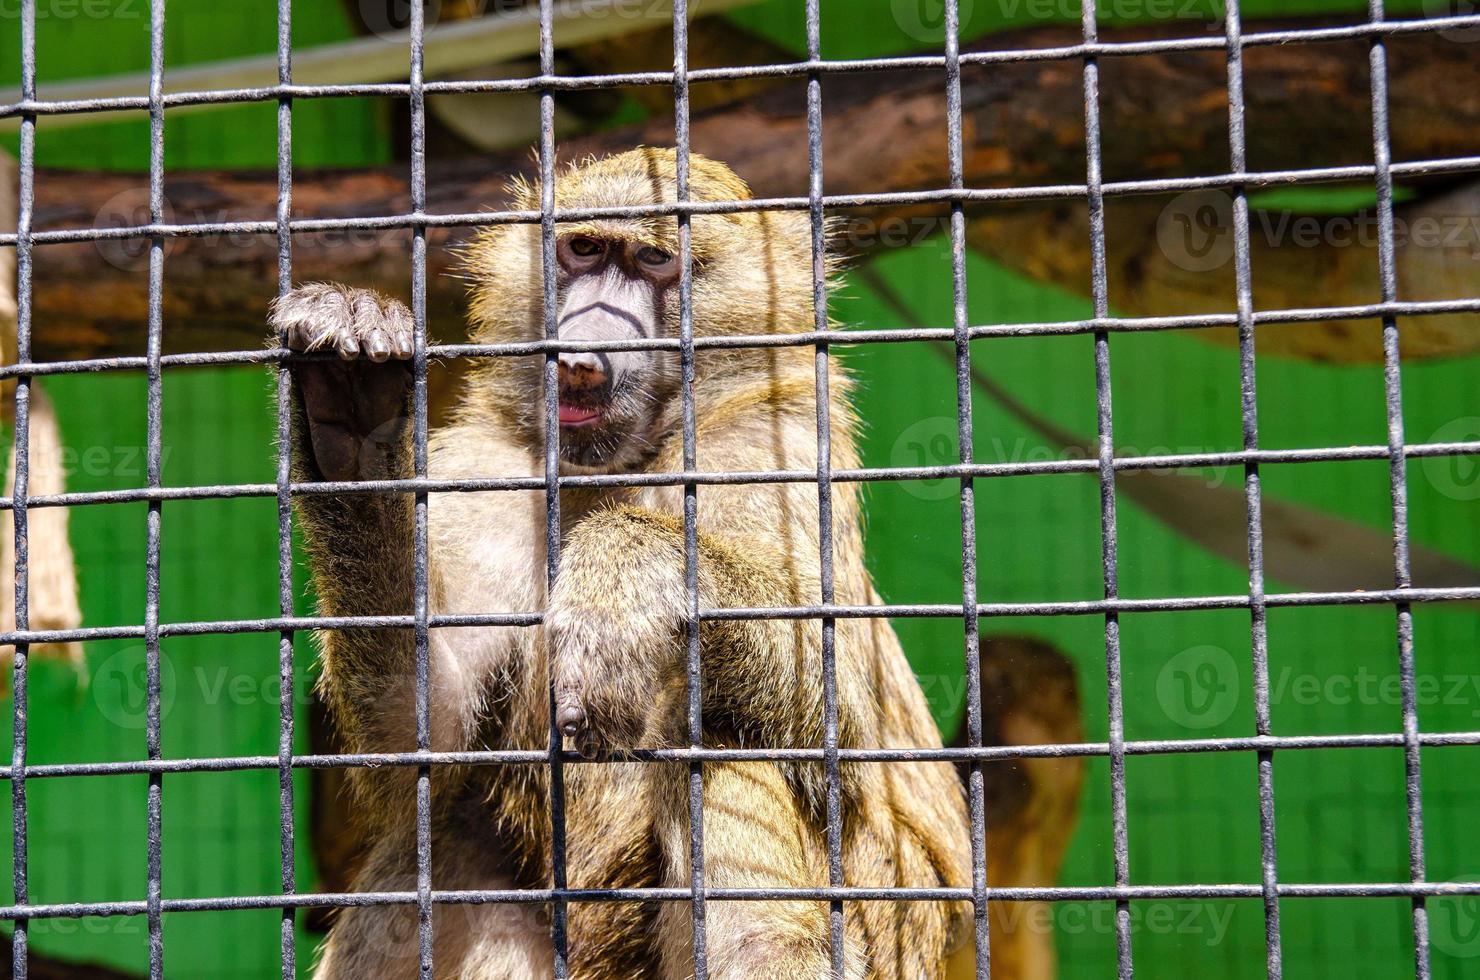 en närbild skott av en apa i en bur i en Zoo foto